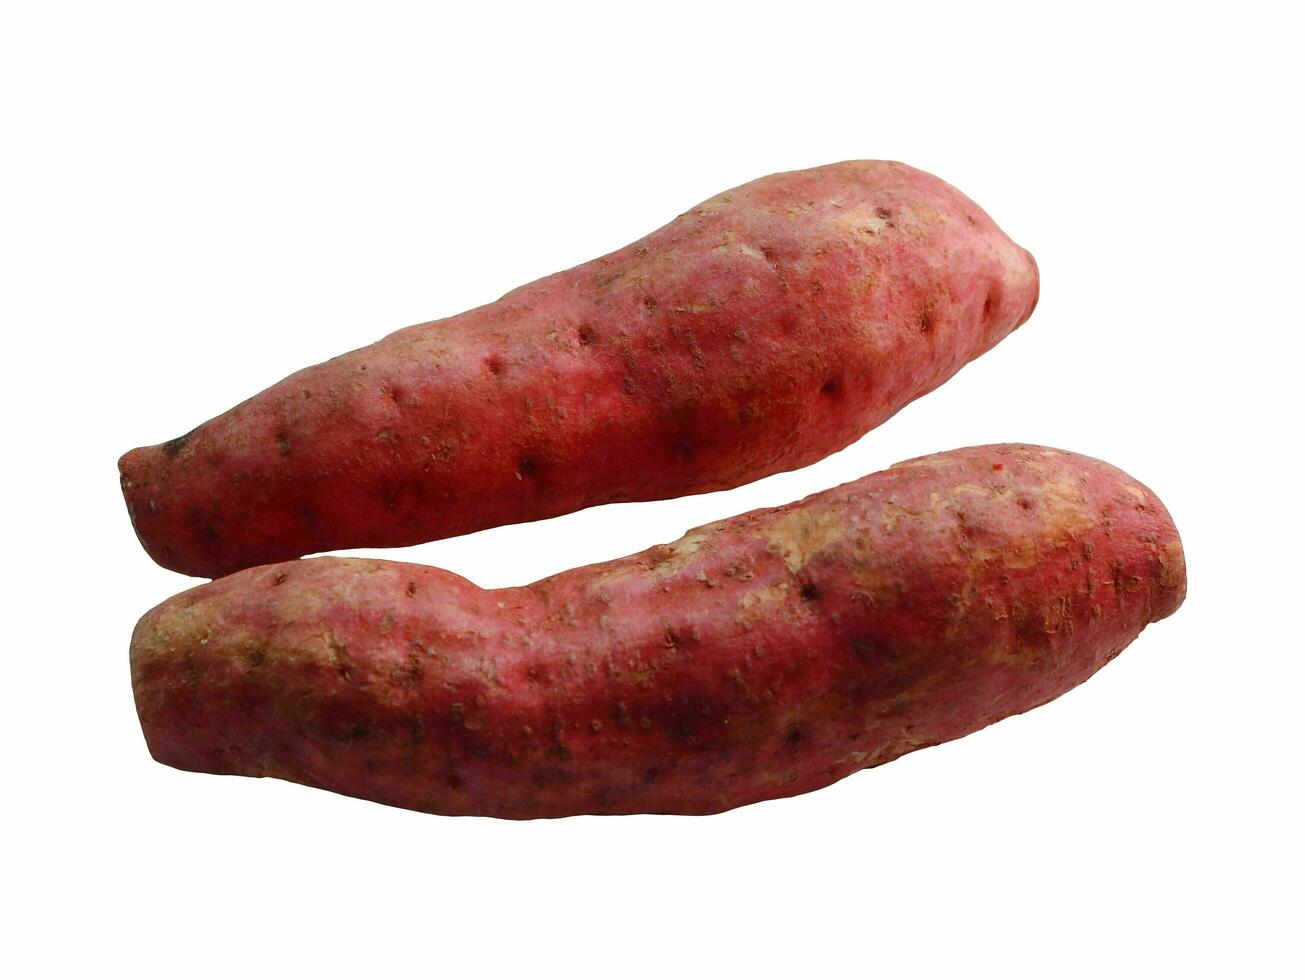 ljuv potatis två på vit bakgrund foto